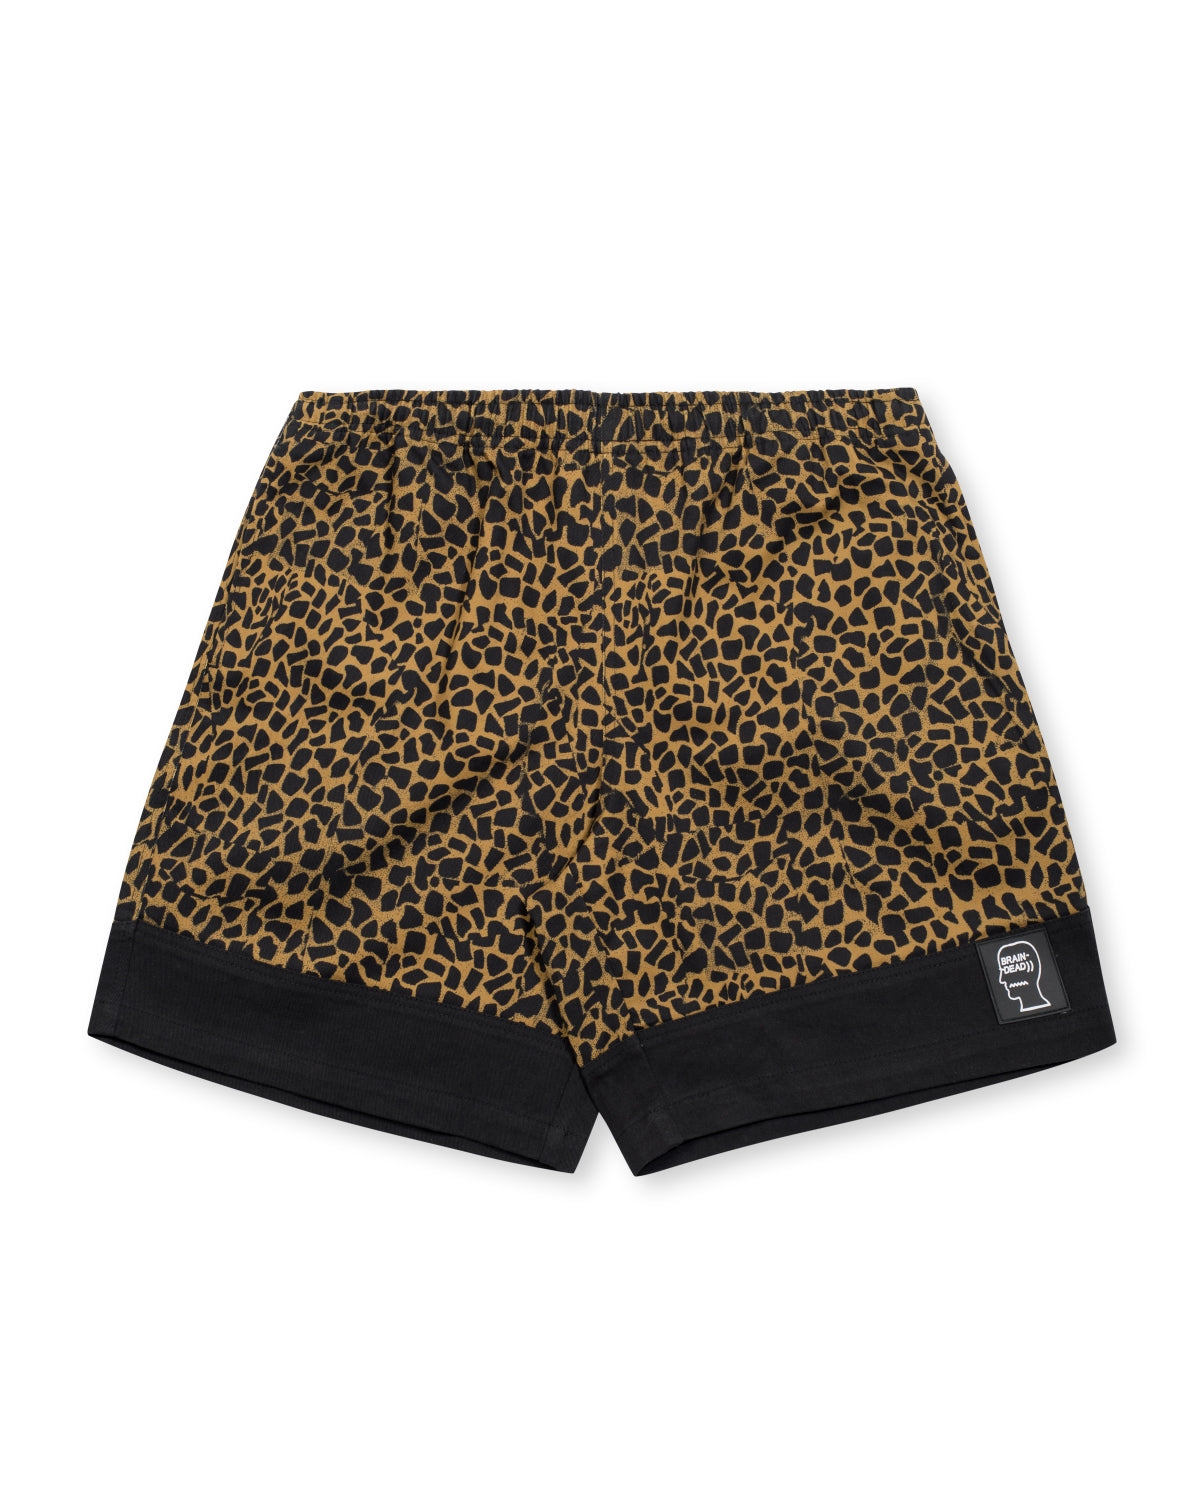 Paneled Leopard Dress Short - Leopard / Black 1